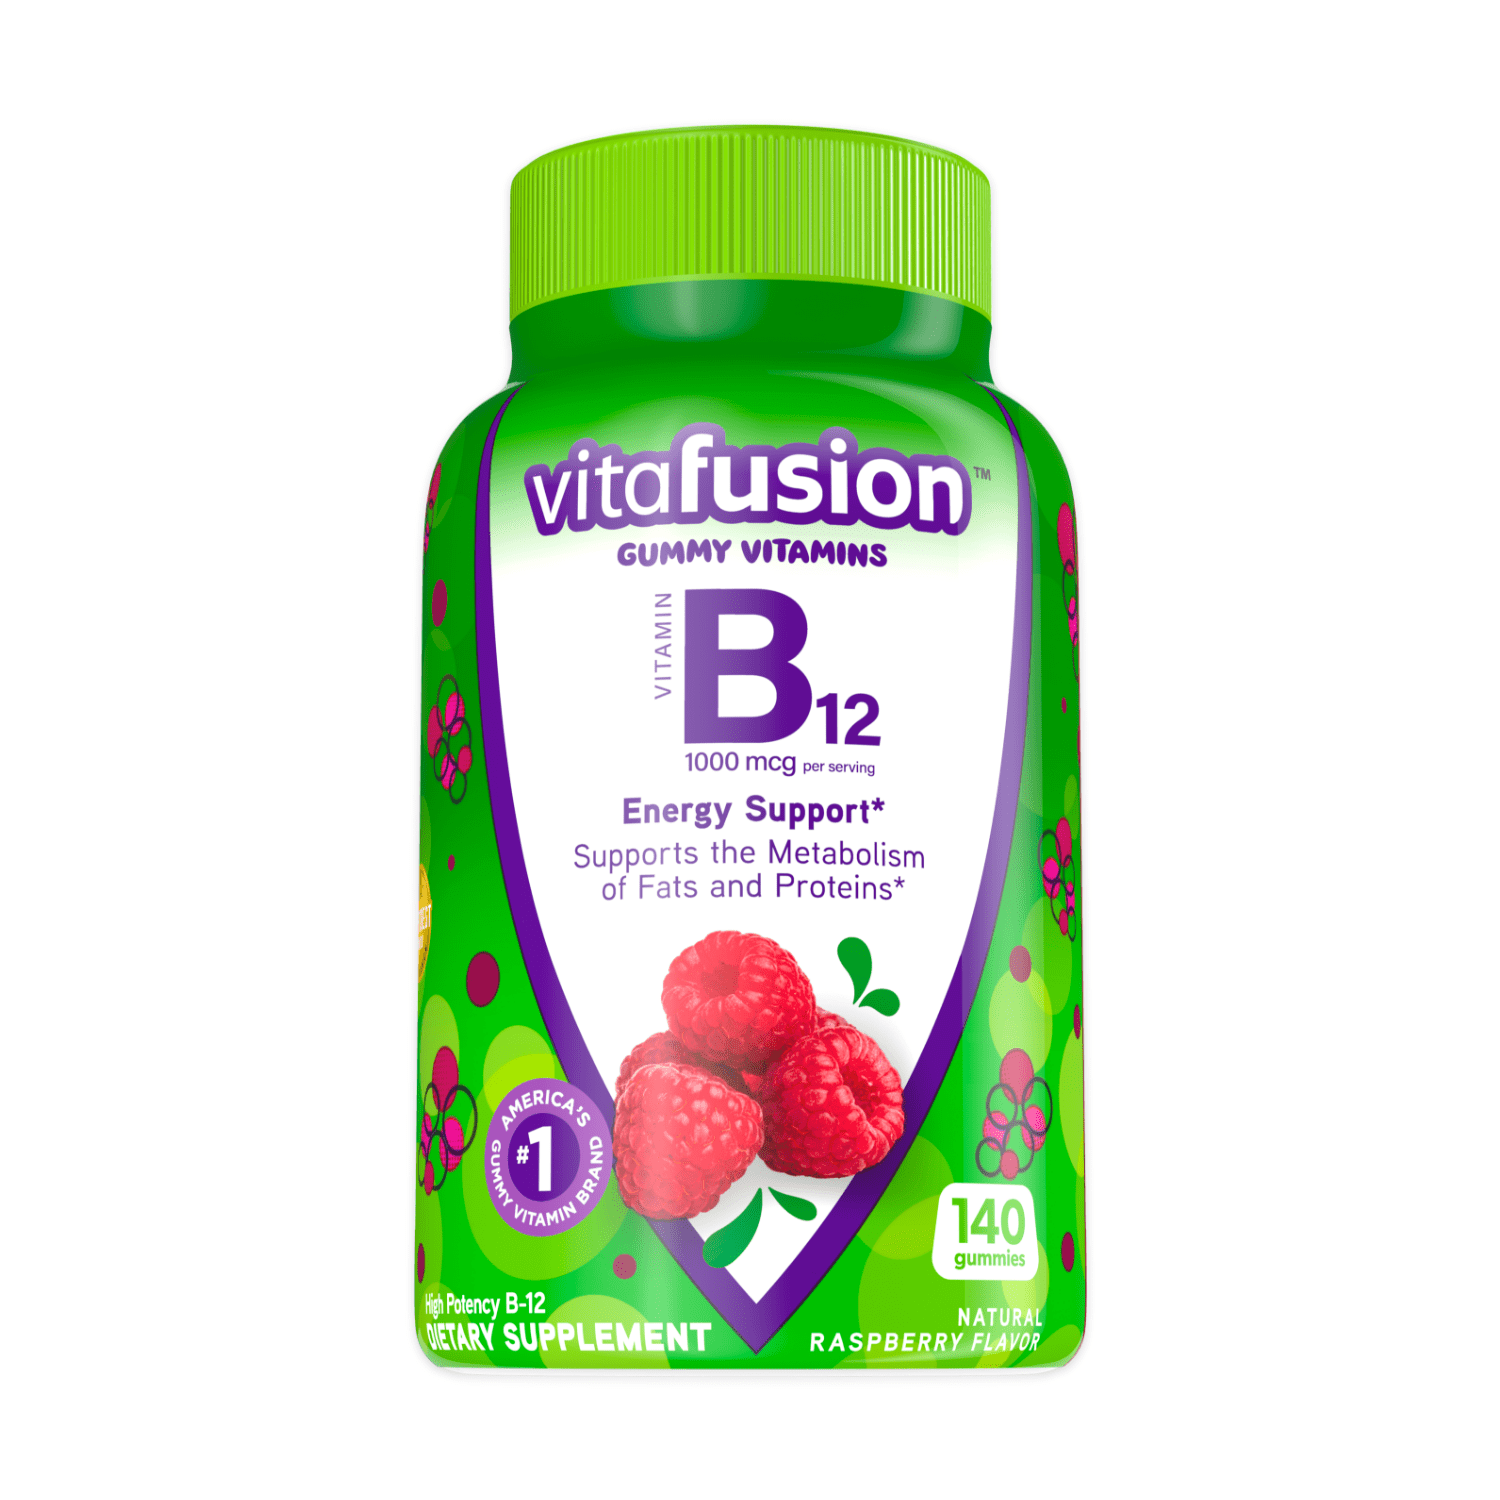 vitafusion Vitamin B12 Gummy Vitamins, Raspberry Flavored, 140 Count